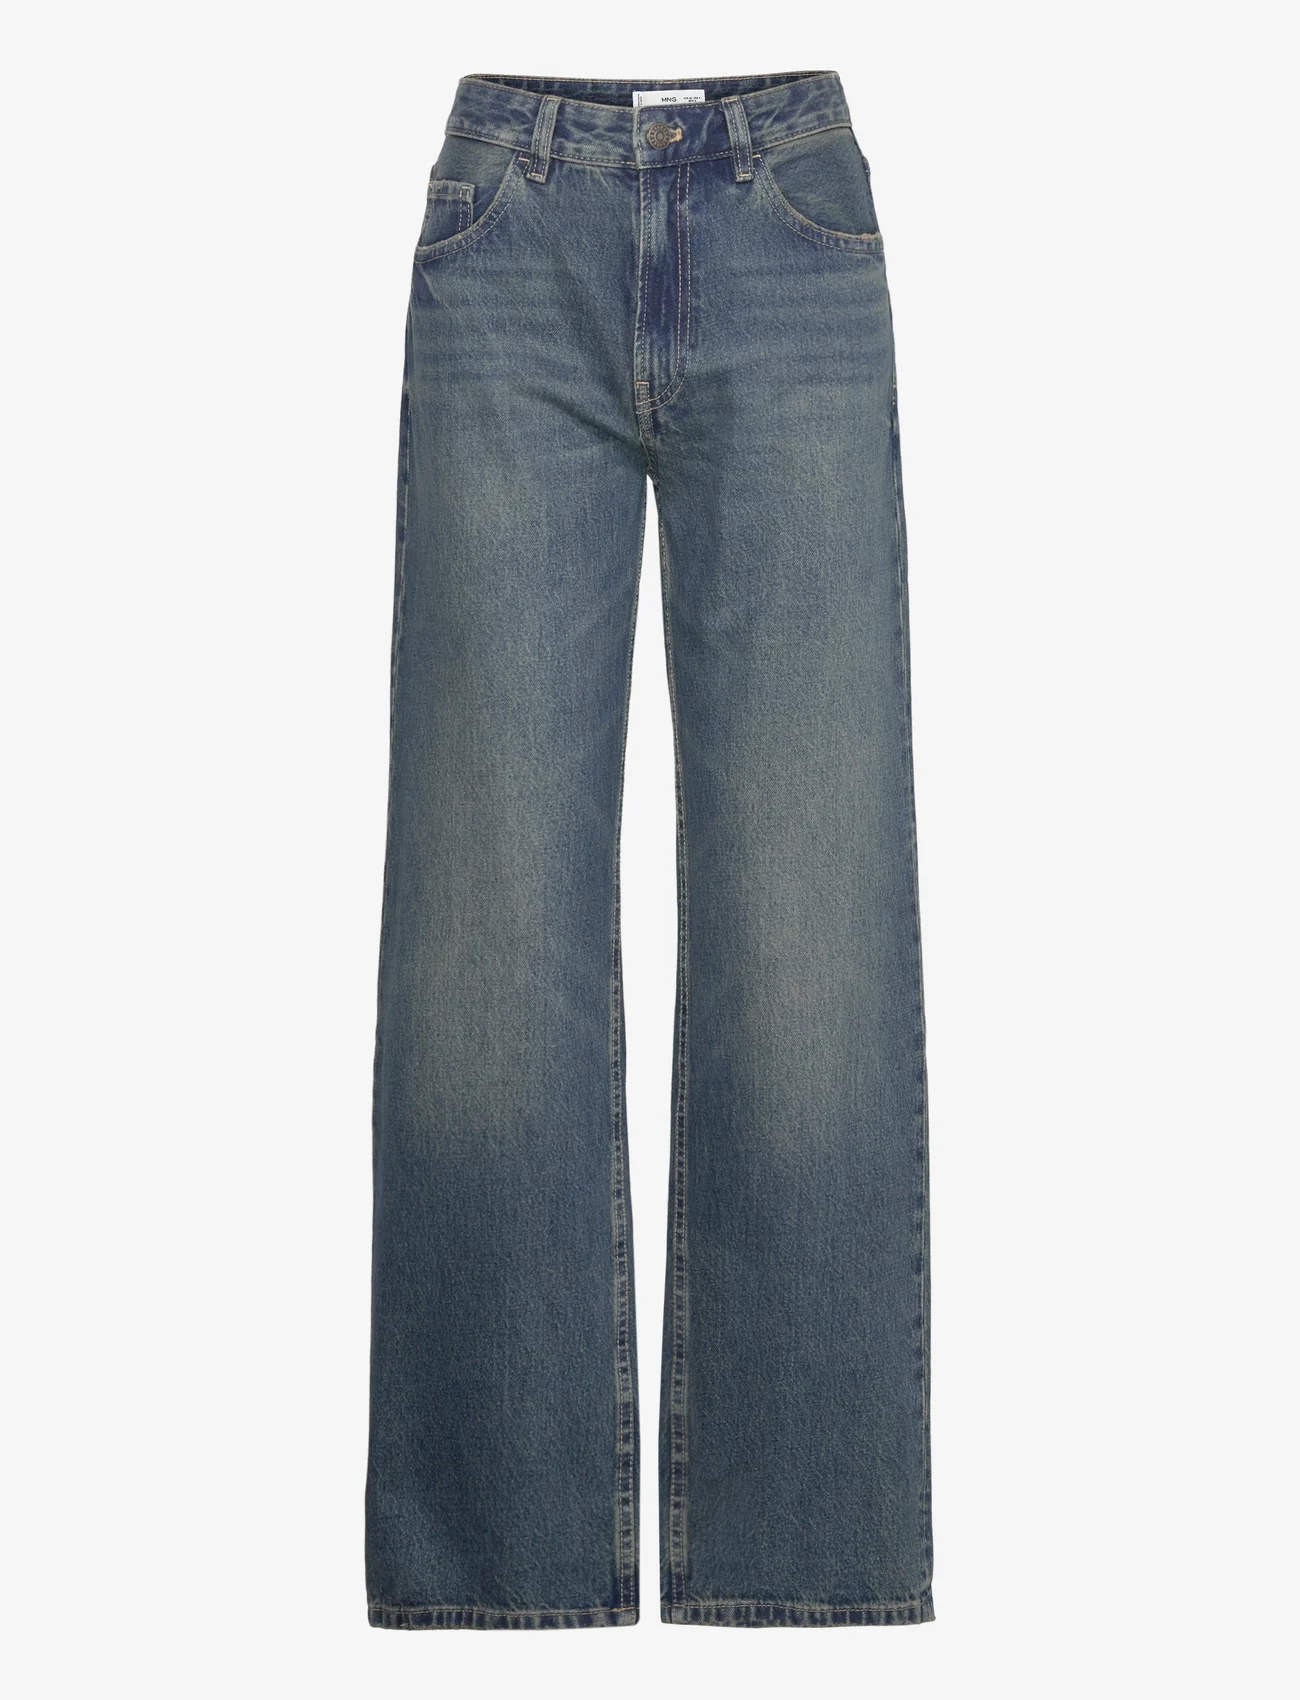 Mango - Mid-rise straight jeans - vide jeans - open blue - 0